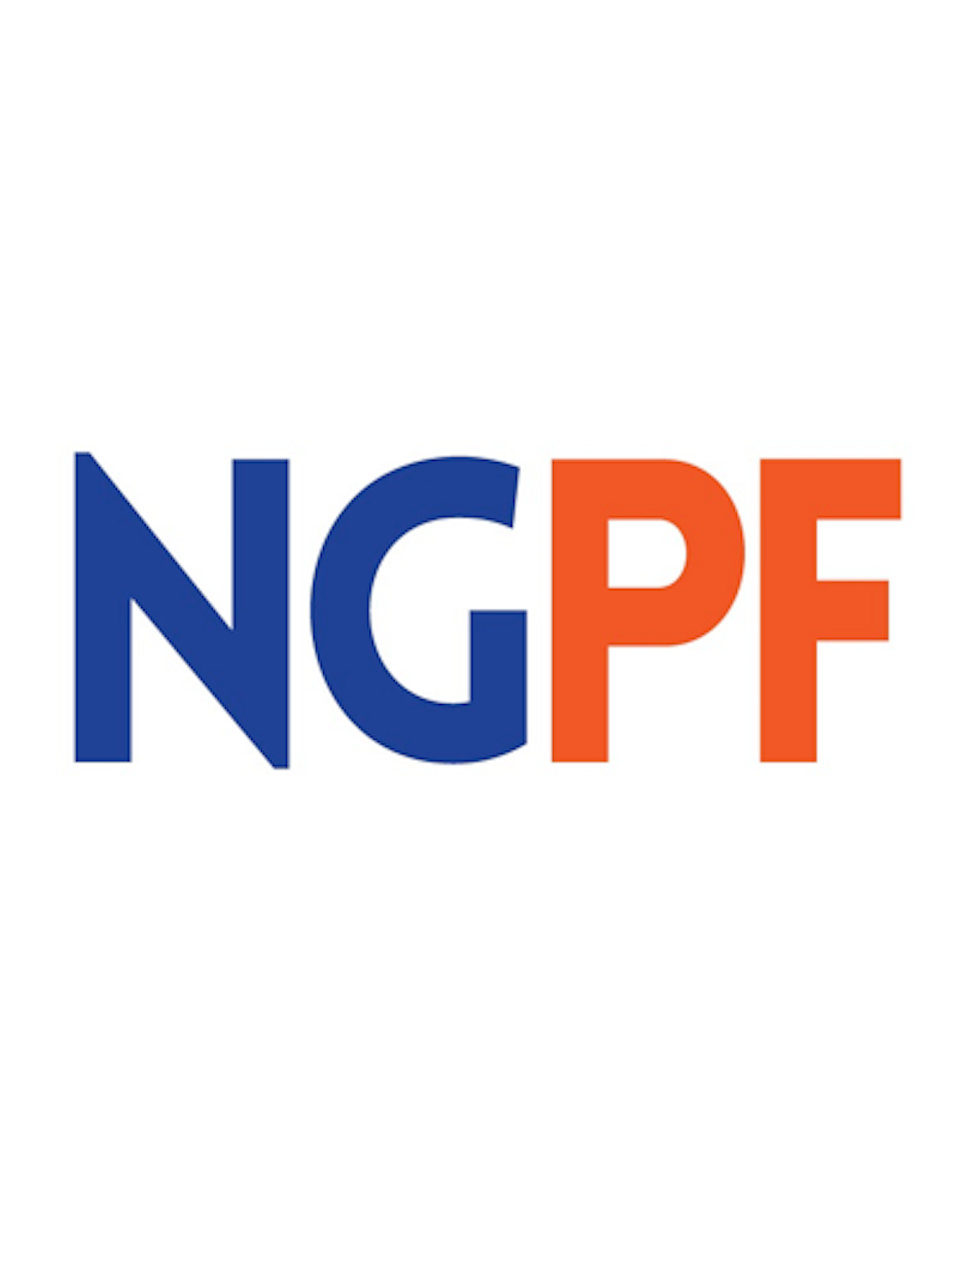 Next Gen Personal Finance Ngpf Provider Jump Tart